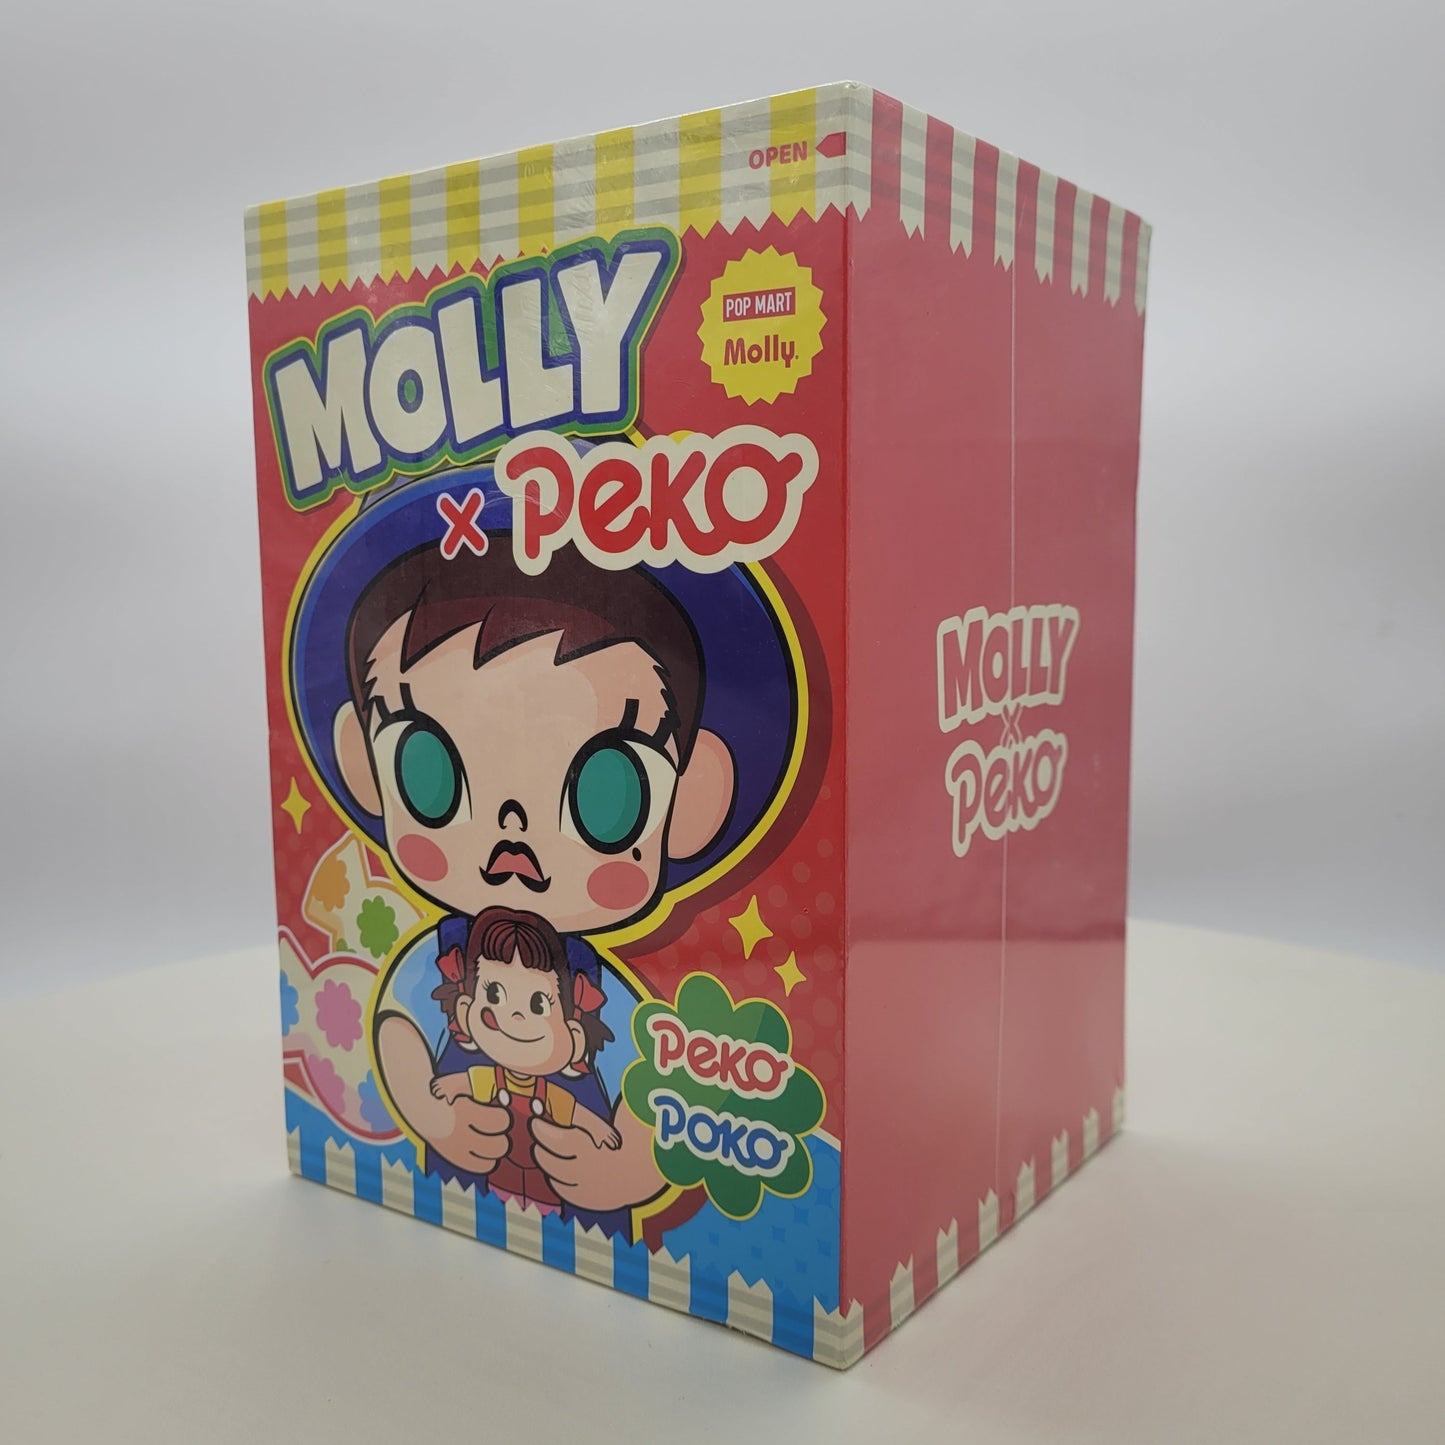 ETTV PopMart Molly Peko Poko Fujiya Collector's Edition New Sealed Unopened (BOY)